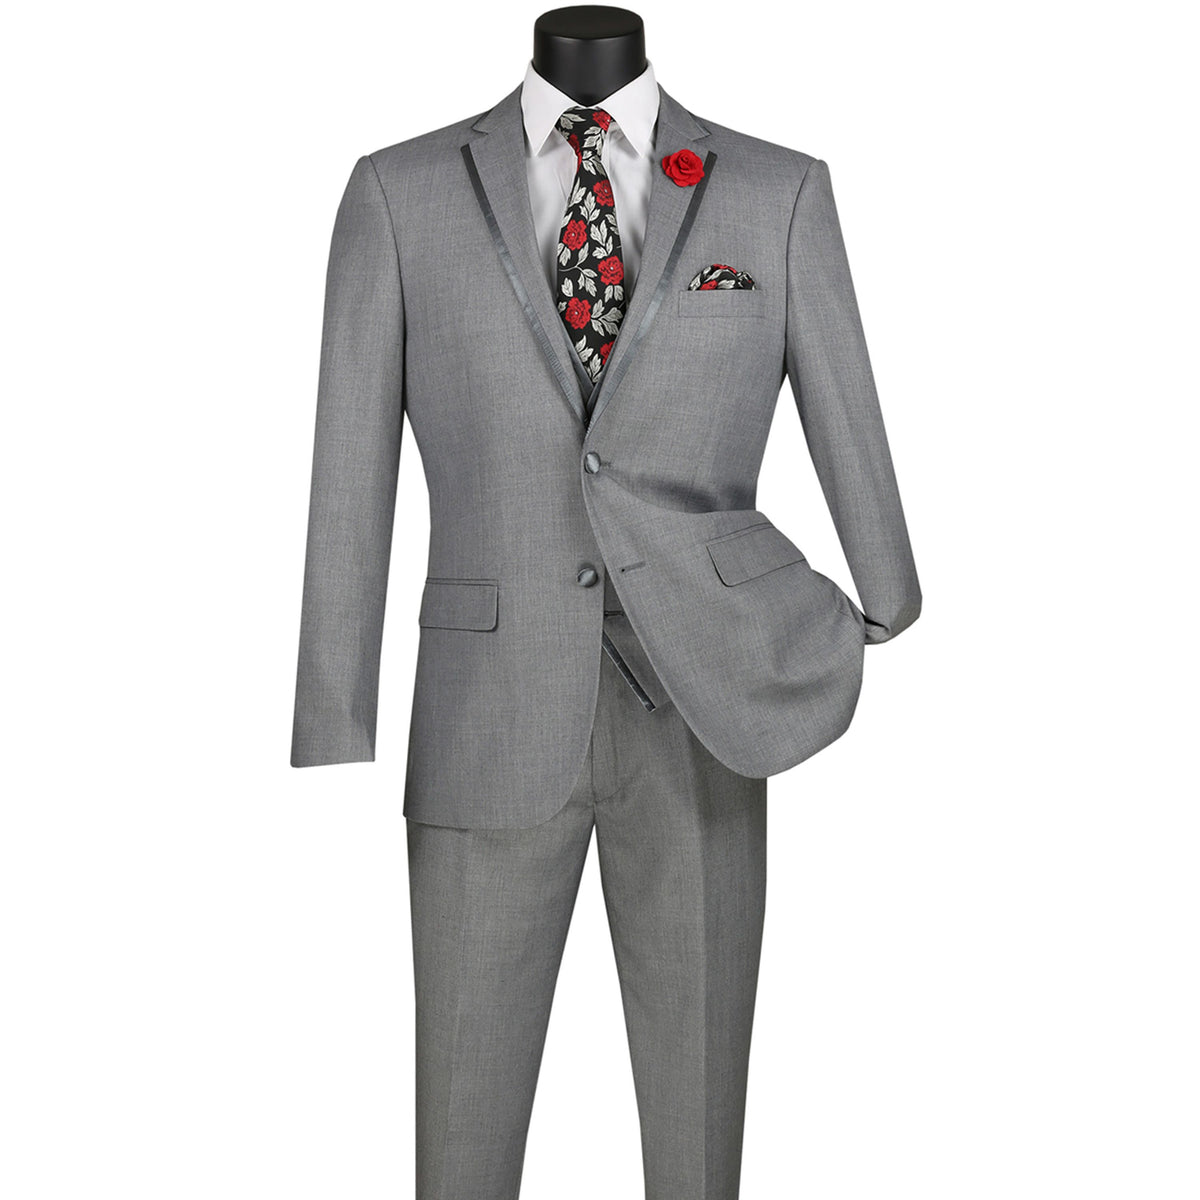 Trimmed 3-Piece Slim-Fit Tuxedo in Light Gray